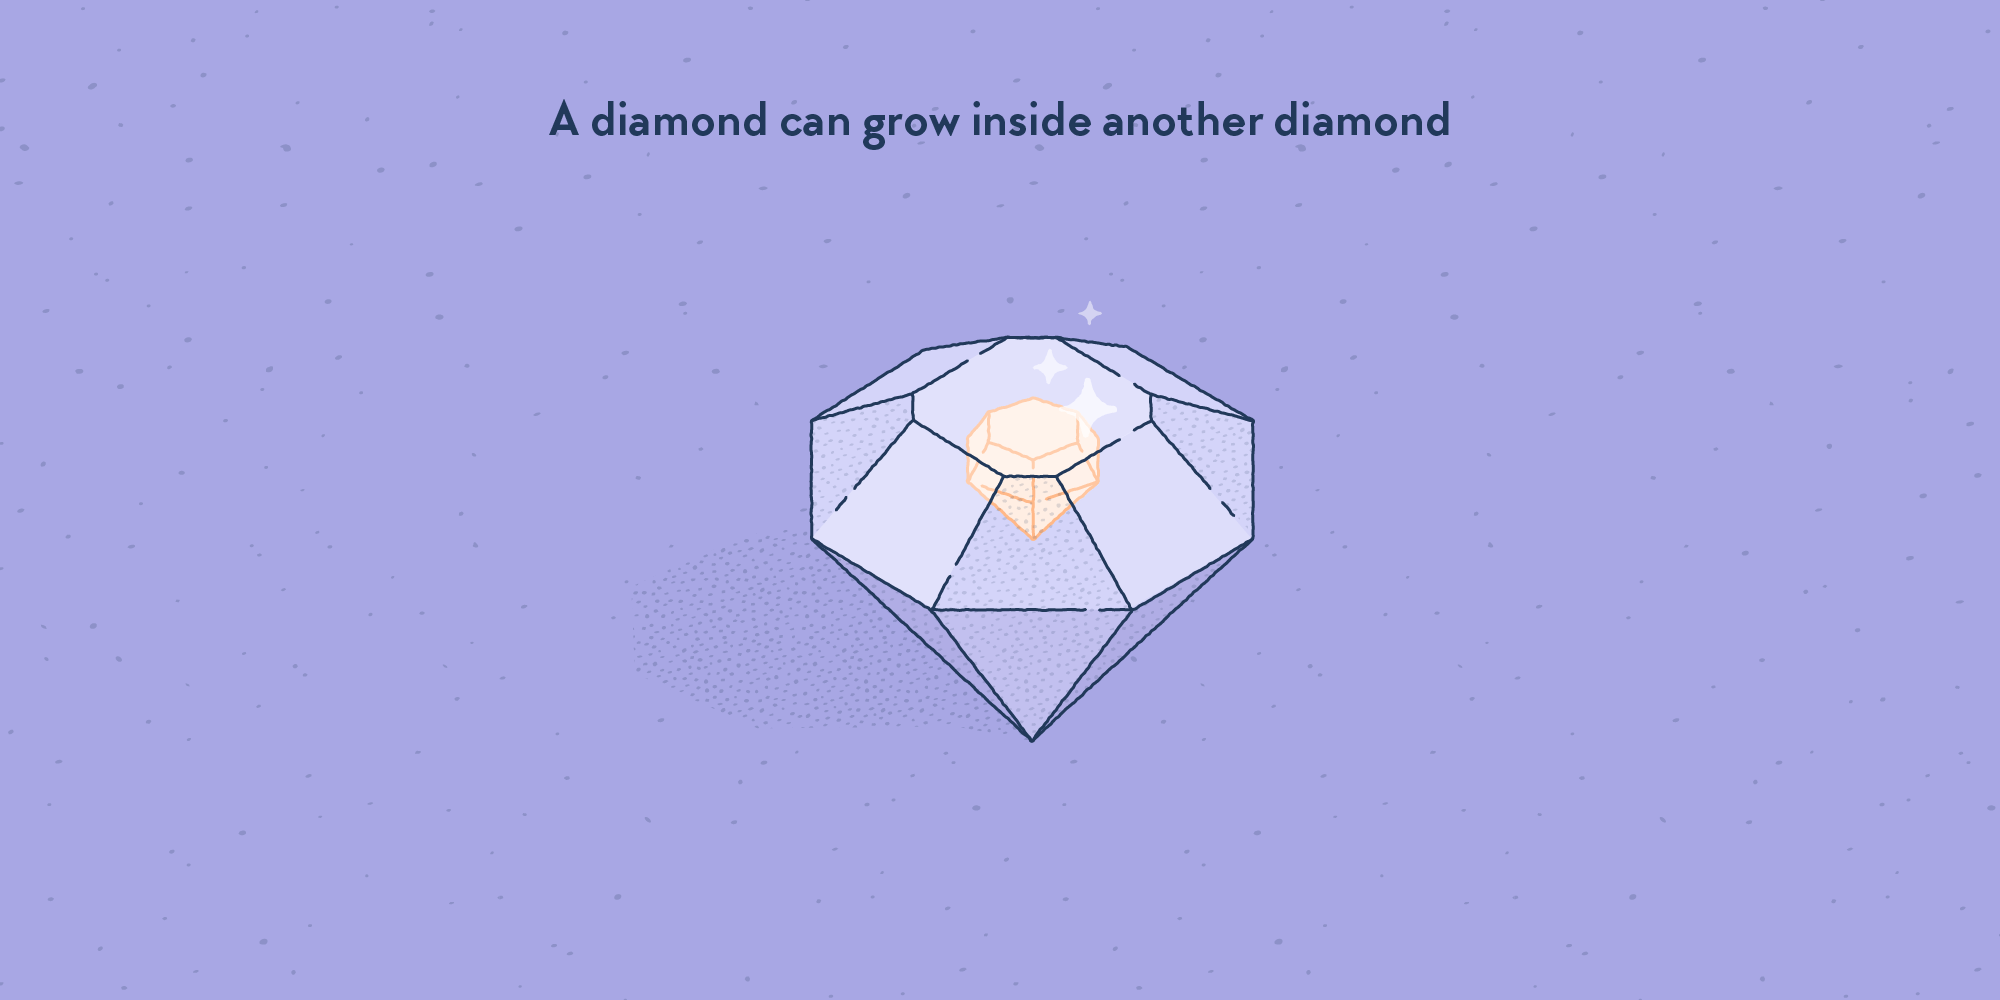 A diamond inside another diamond.